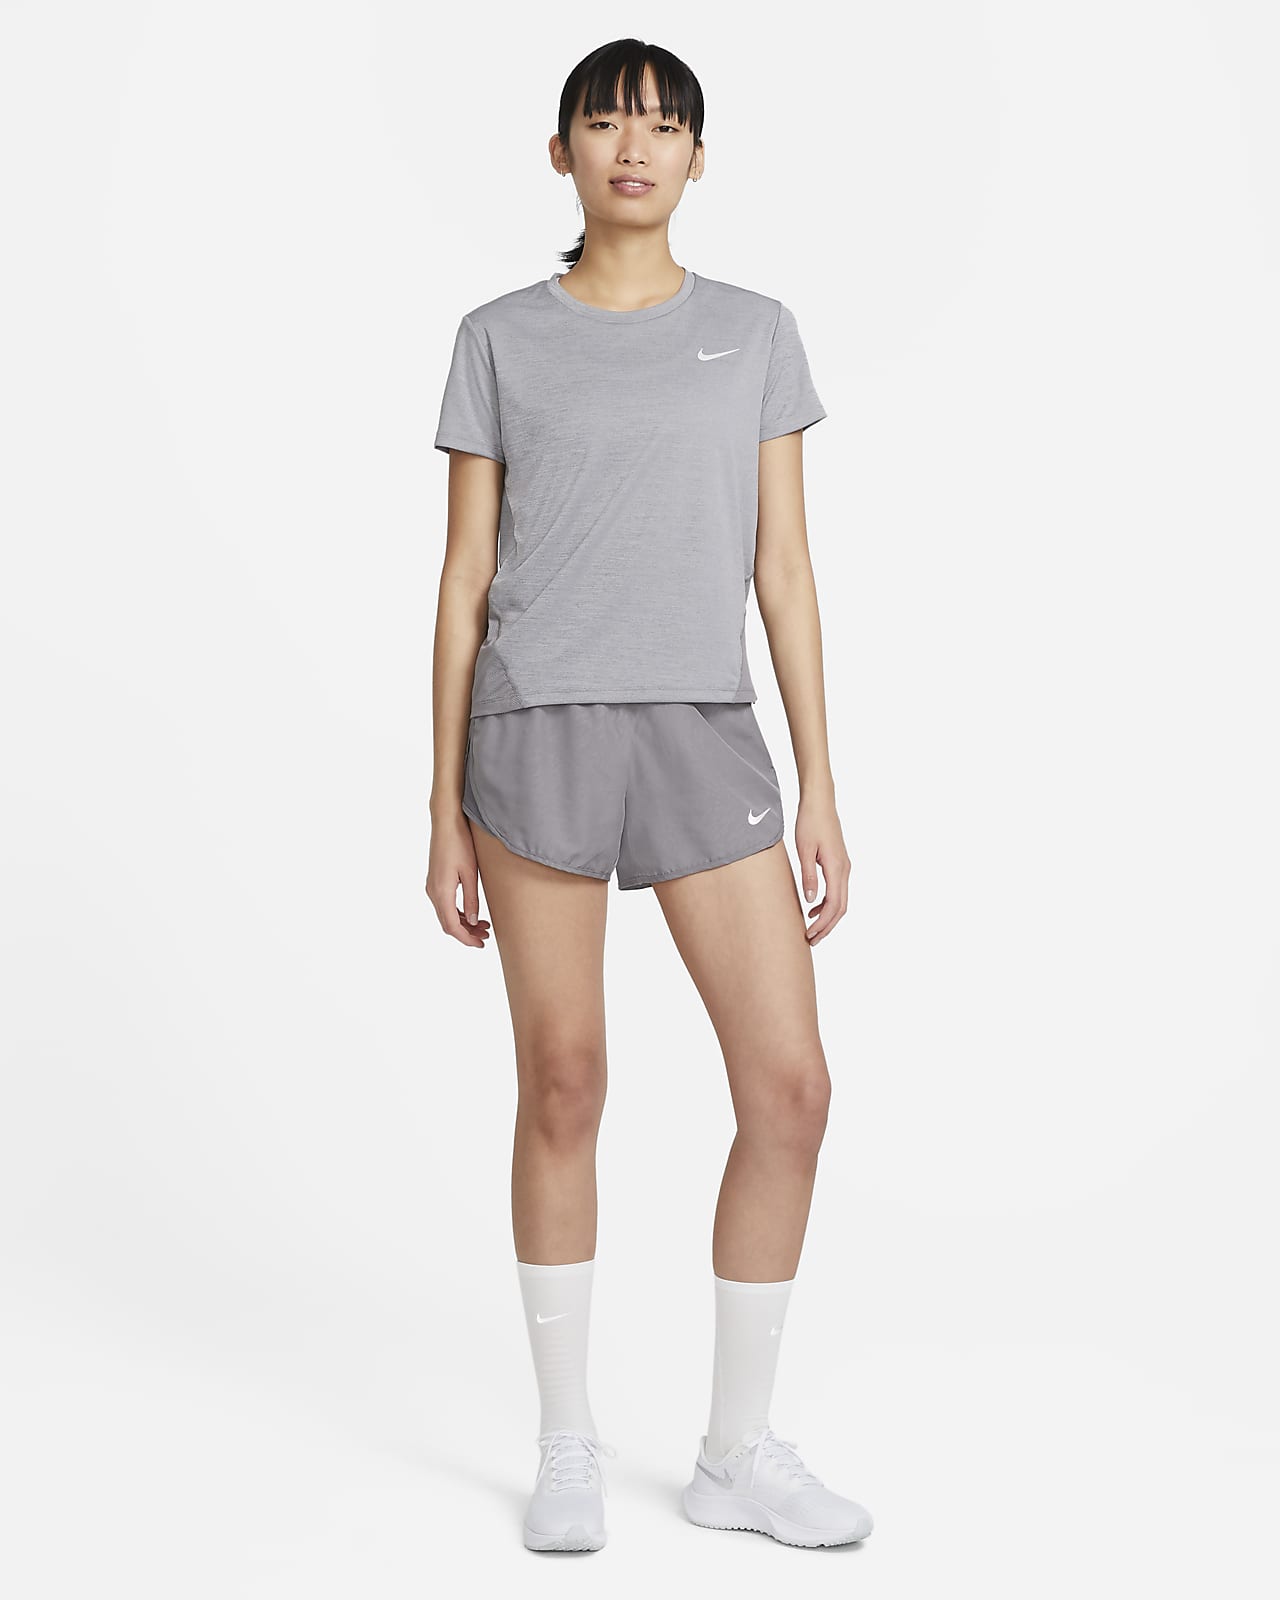 Nike Running Miler Women\'s Top. Short-Sleeve